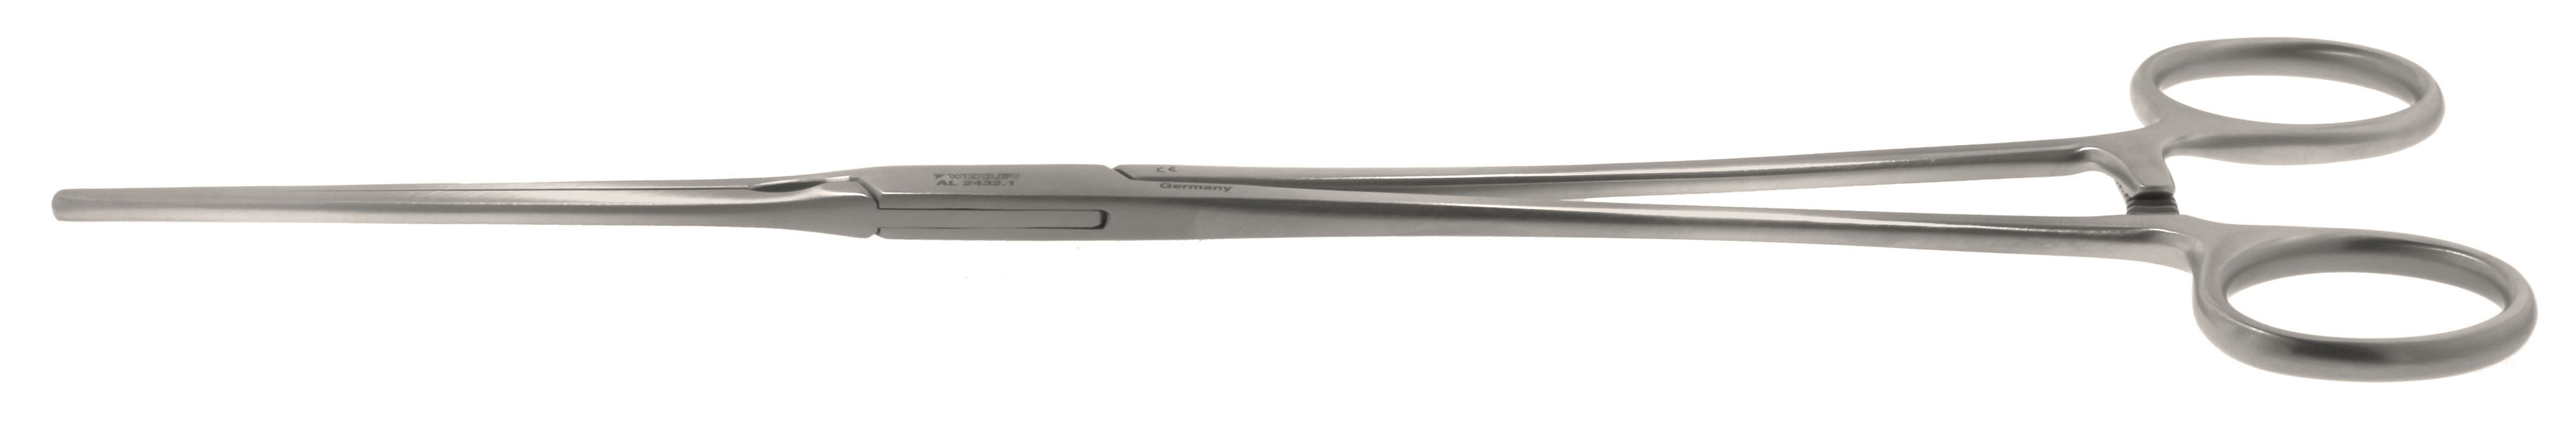 Wexler Multi-Purpose Clamp - Straight 85mm long DeBakey Atraumatic jaws